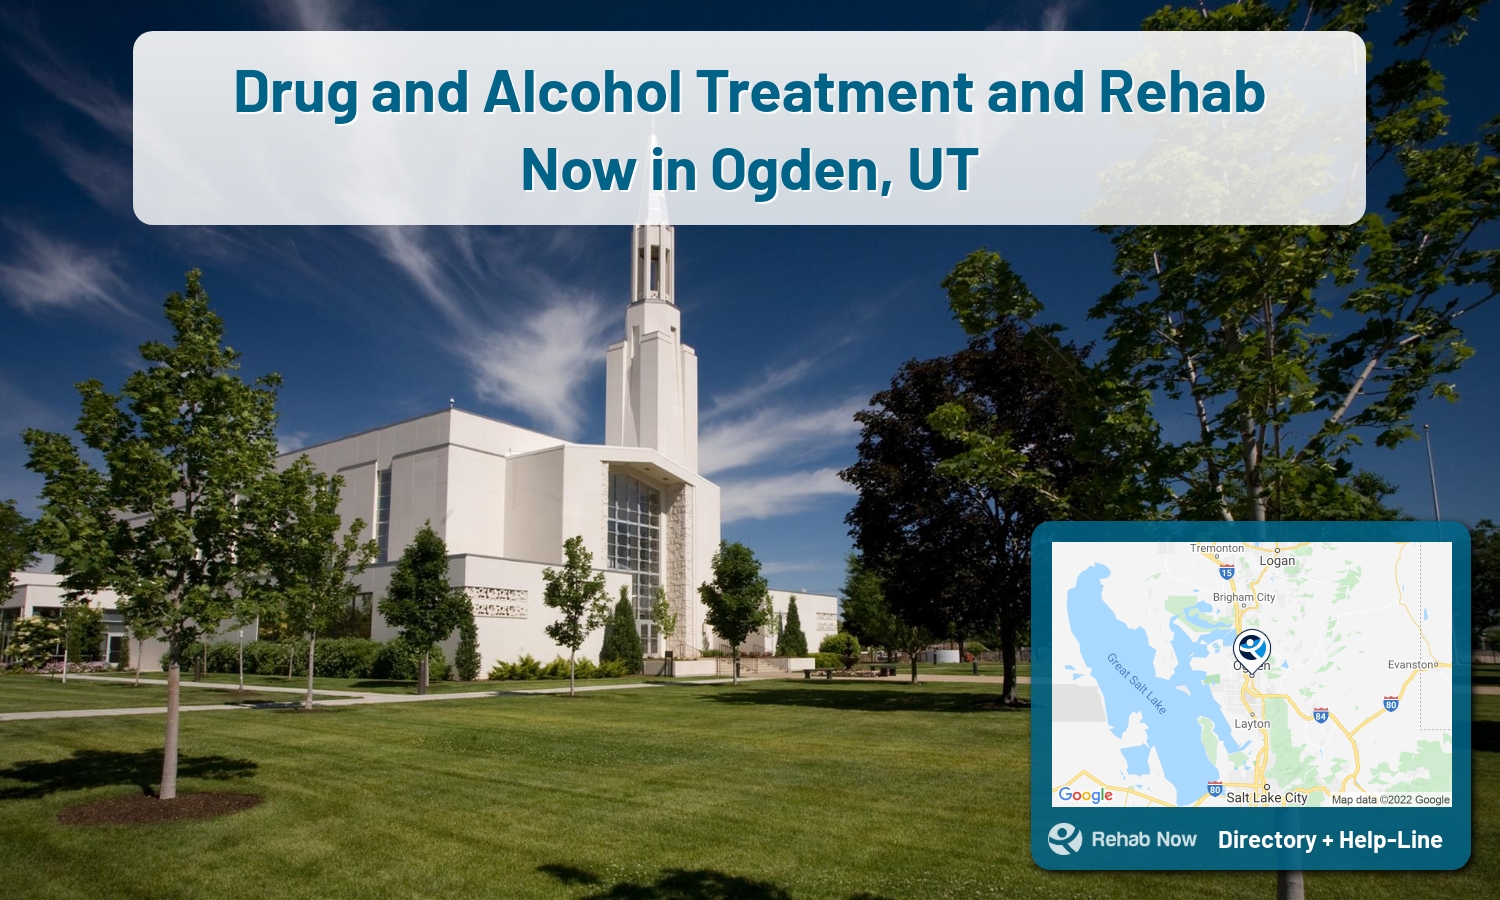 Ogden, UT Treatment Centers. Find drug rehab in Ogden, Utah, or detox and treatment programs. Get the right help now!